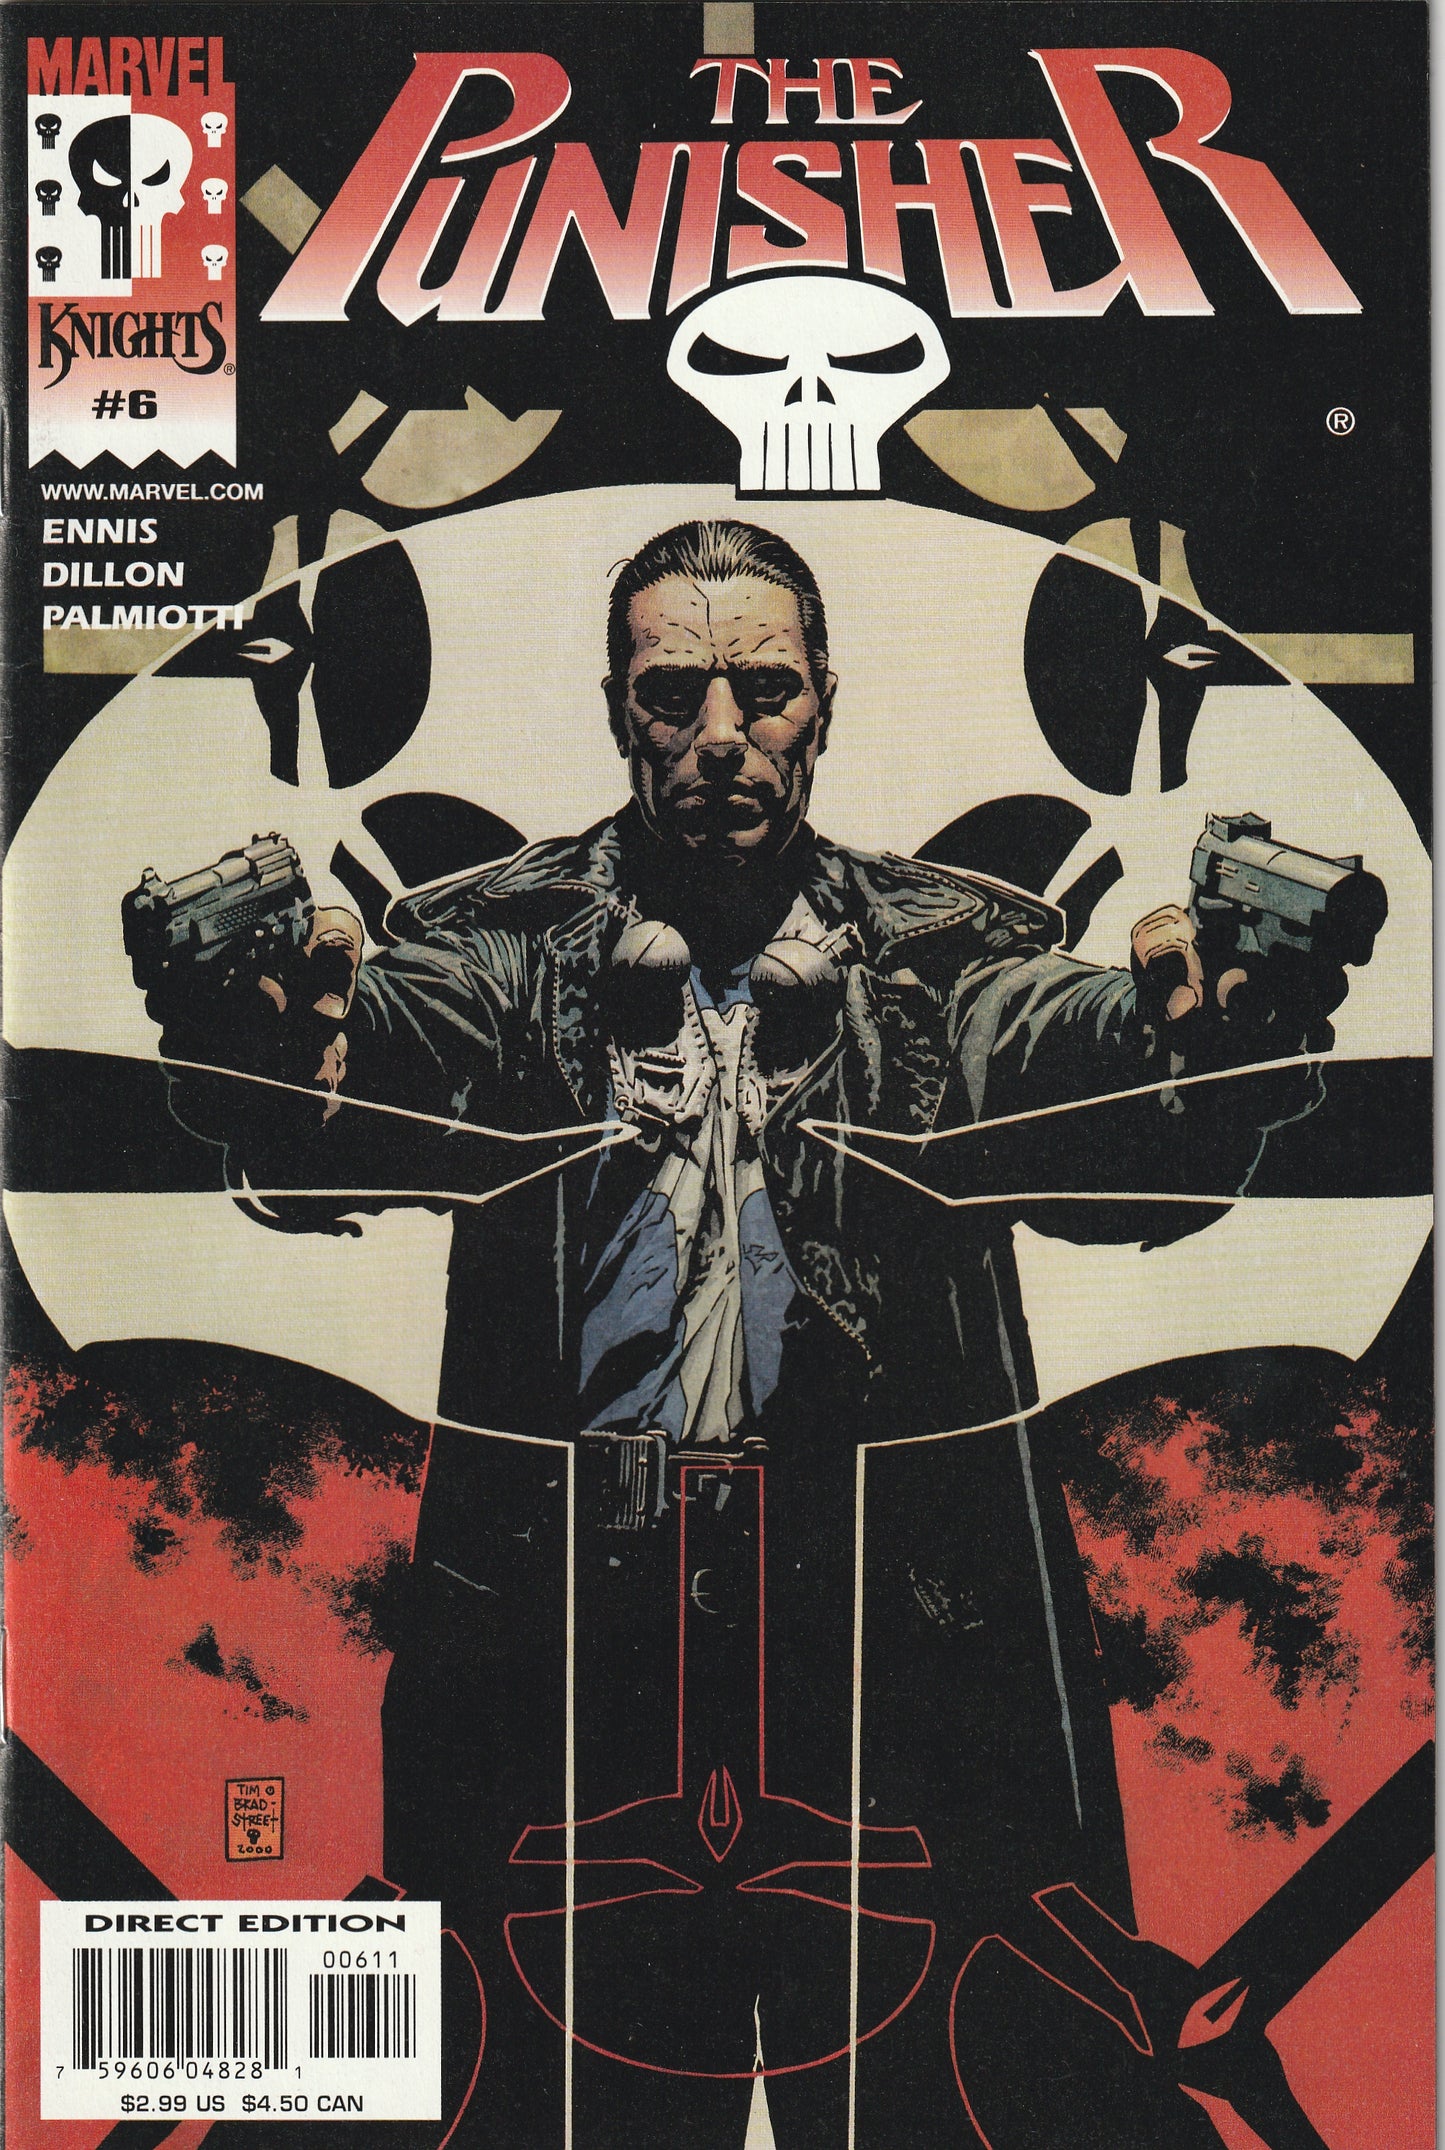 The Punisher #6 (Marvel Knights Vol 4, 2002) - Garth Ennis, Steve Dillon, Jimmy Palmiotti